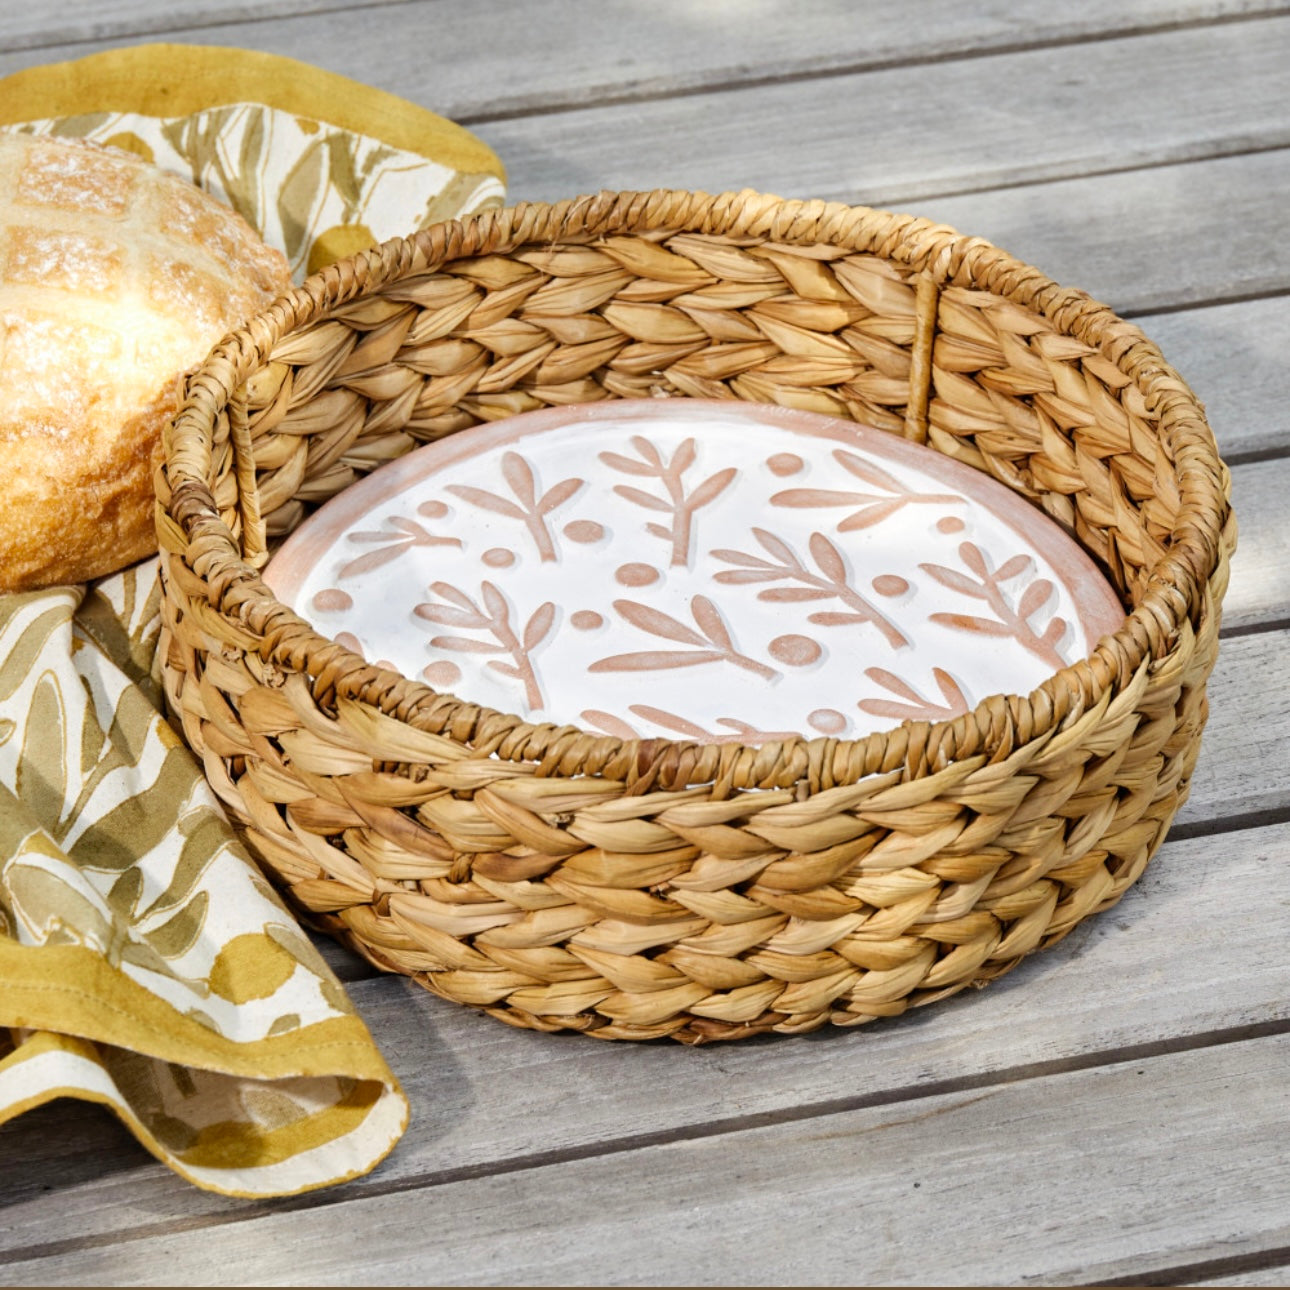 Terra Cotta Bread Warmer and Basket